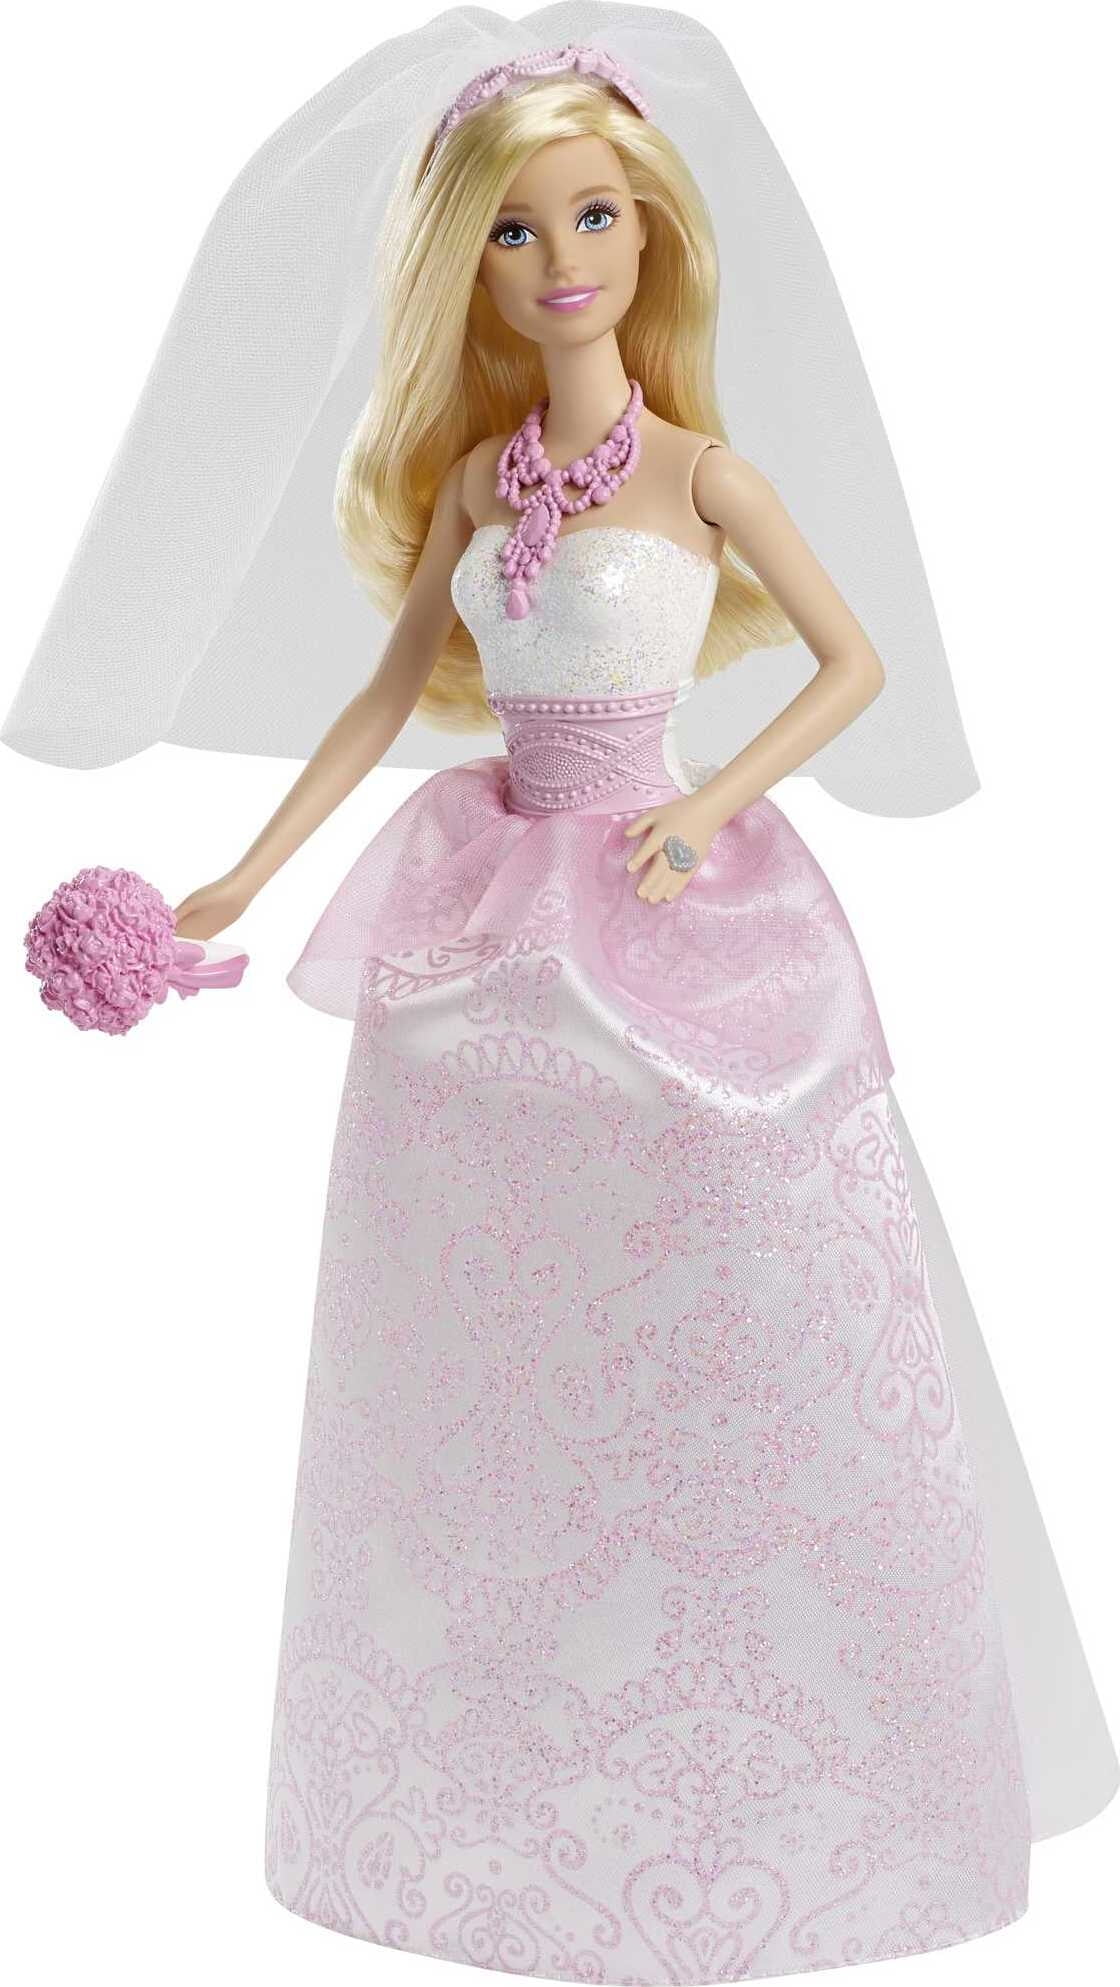 Barbie Bride Doll in Fairytale Wedding Dress with Veil, Bouquet